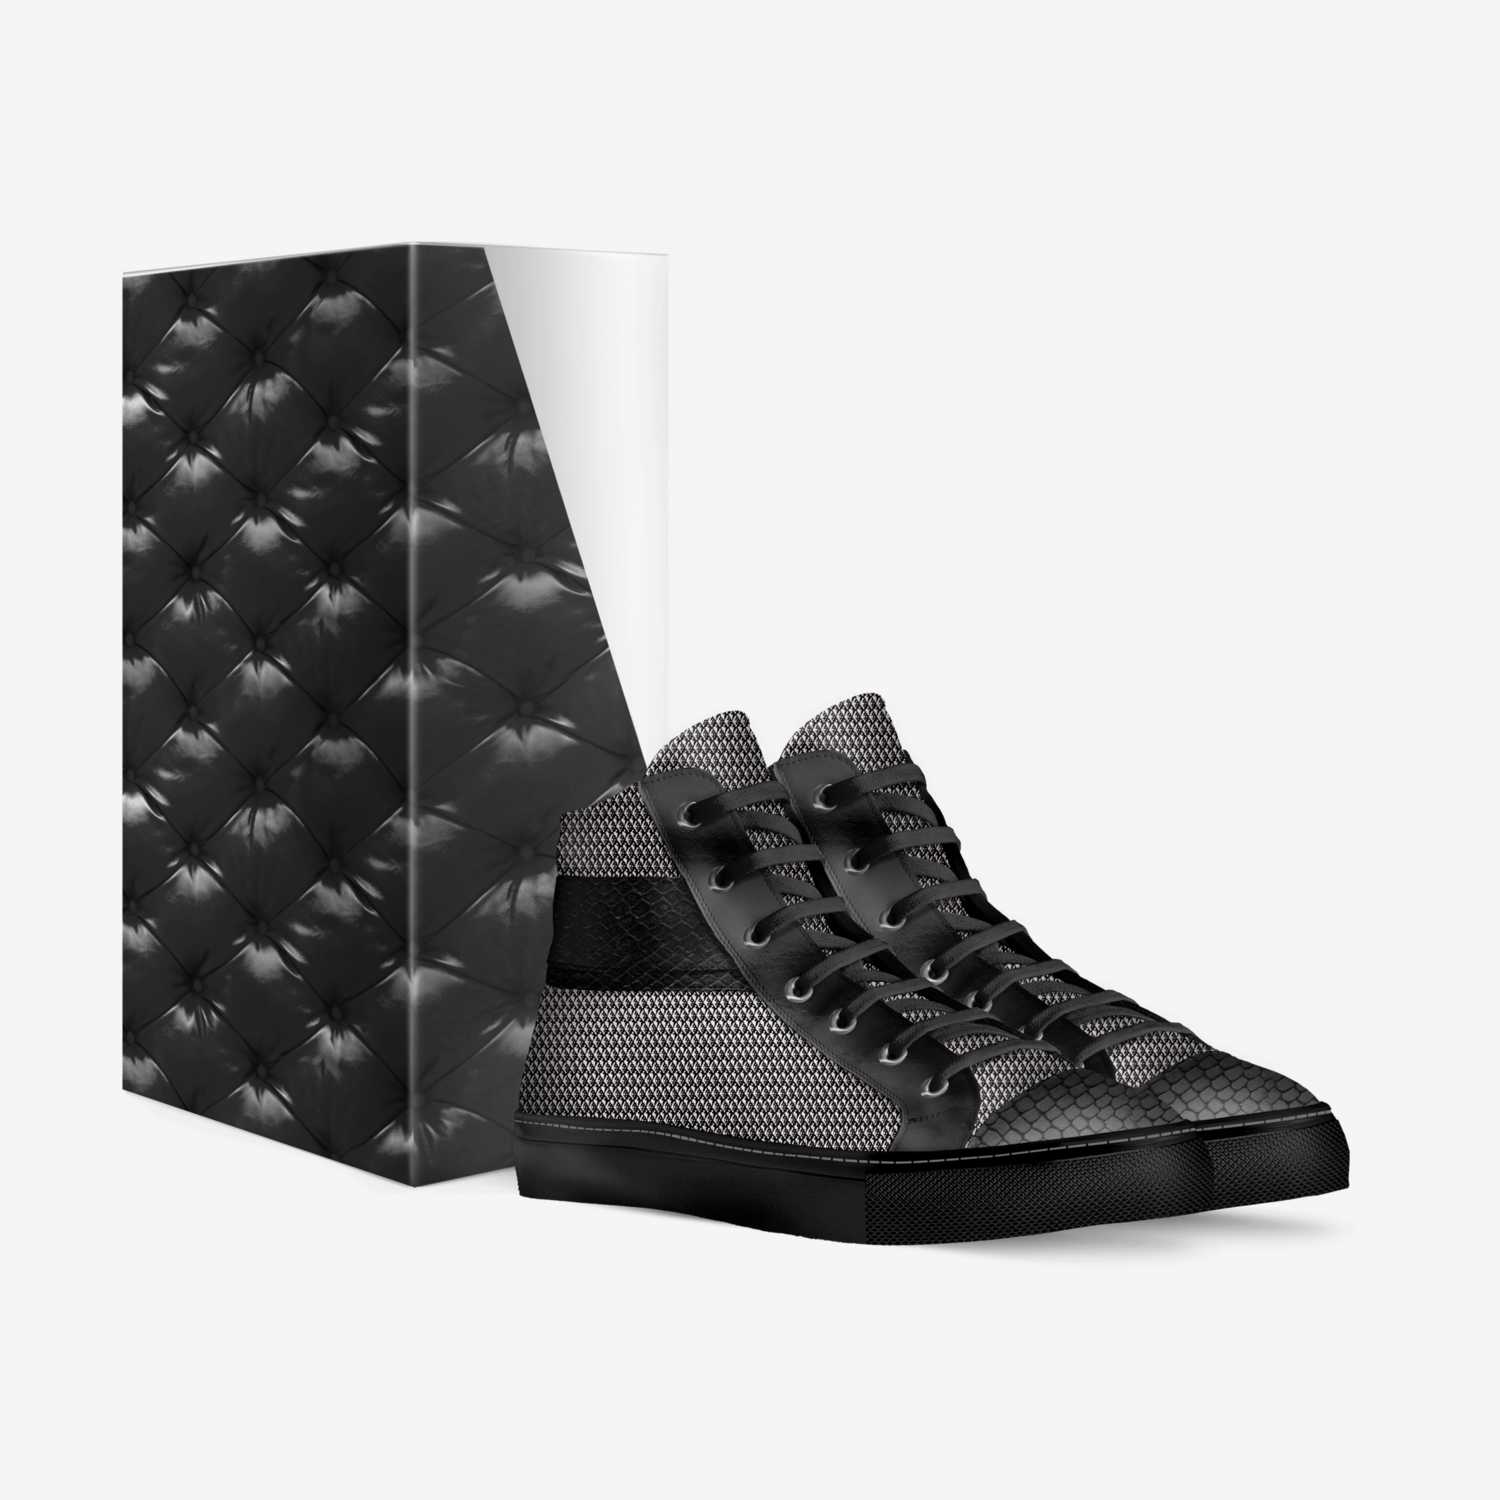 Walkin Wild custom made in Italy shoes by Ladarius Jones | Box view